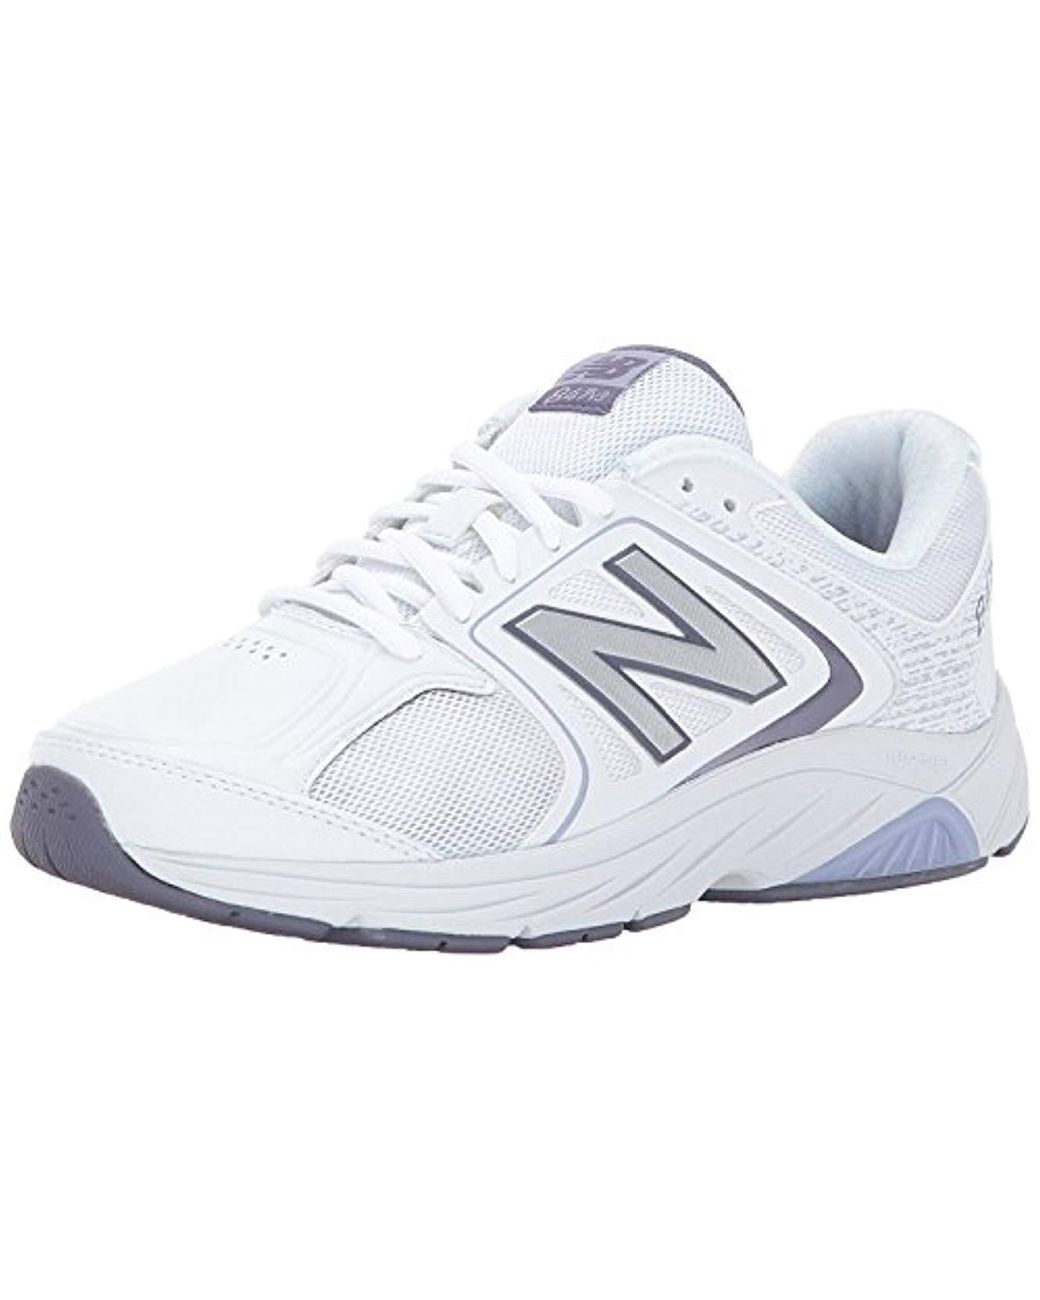 New Balance 847v3 Walking Shoe in White | Lyst